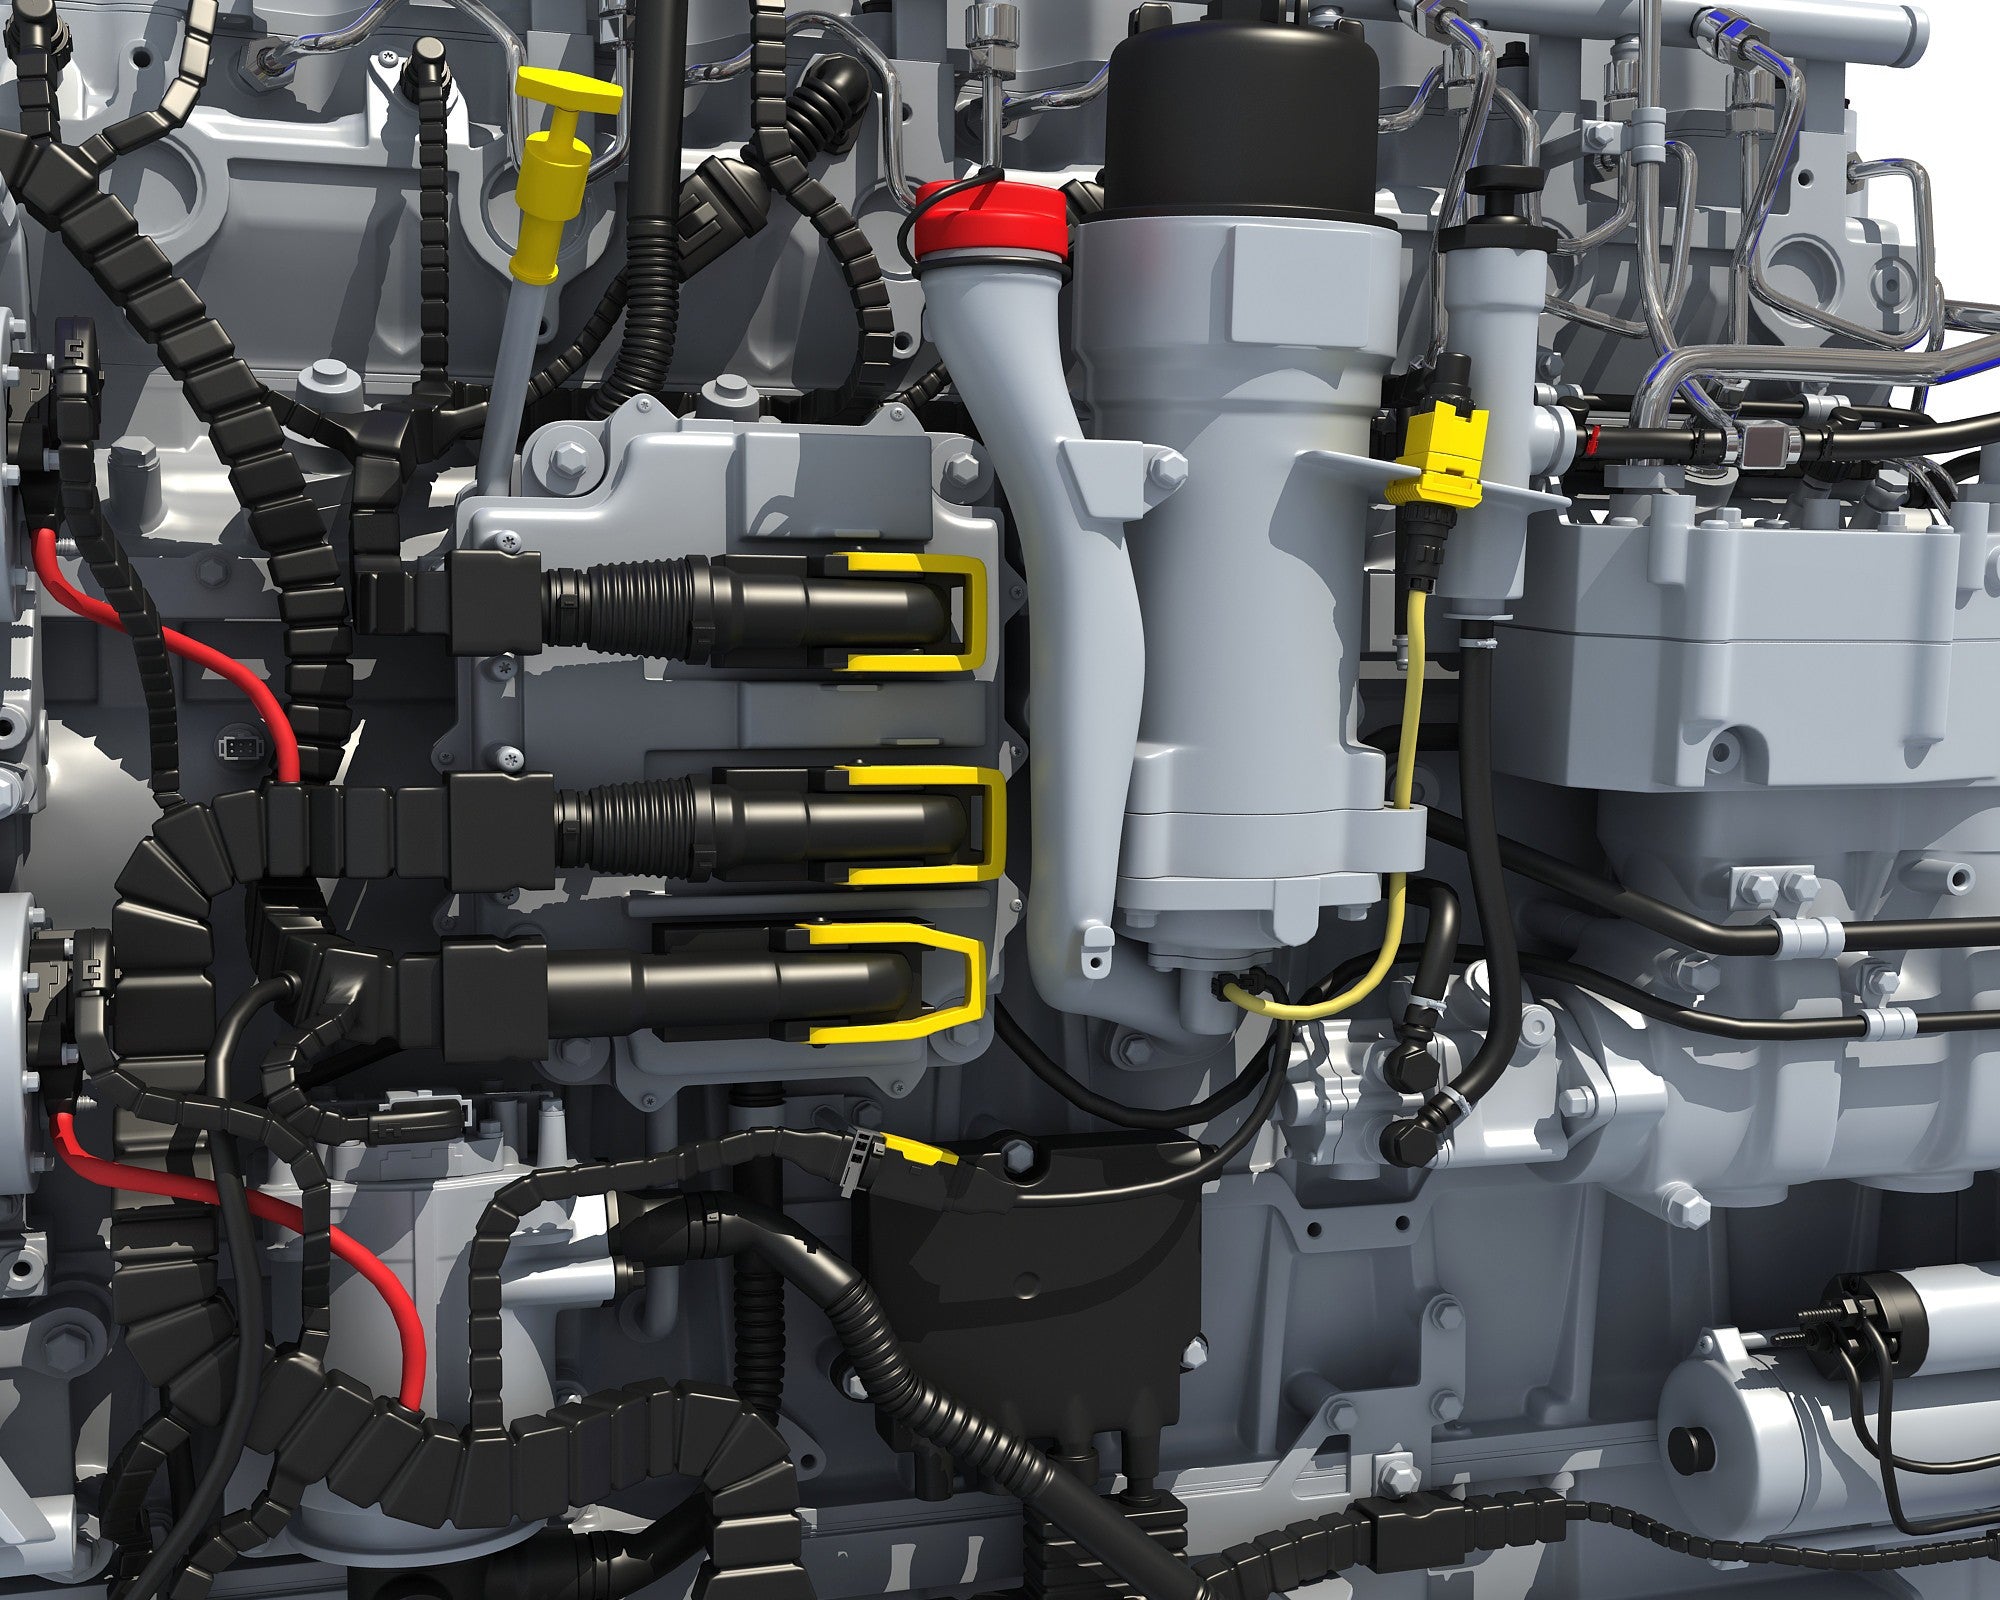 PACCAR MX-13 Powertrain Truck Engine